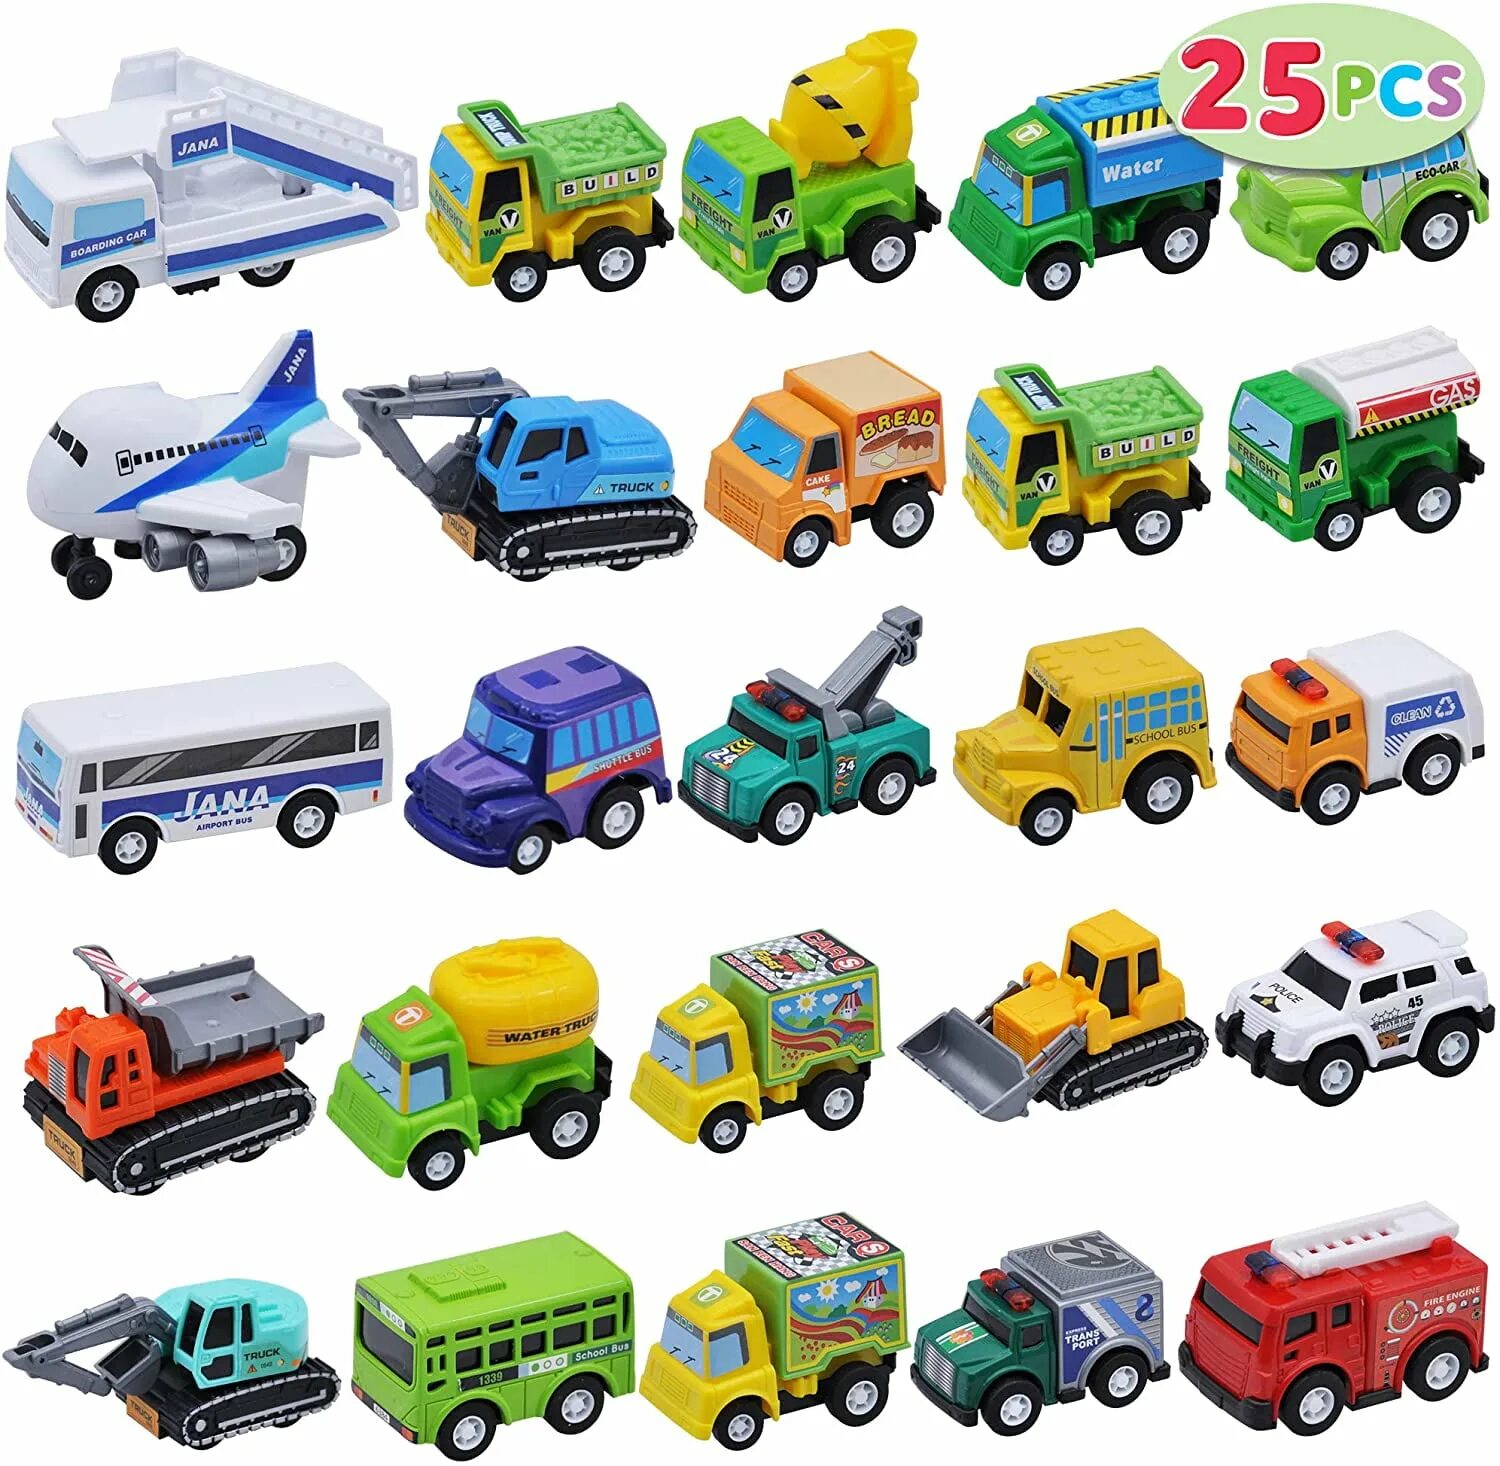 Truck toy cars. Грузовые игрушки Toy car. Toys машина back. Игрушечные машинки Томика. Сити кар машинки Игрушечные набор.